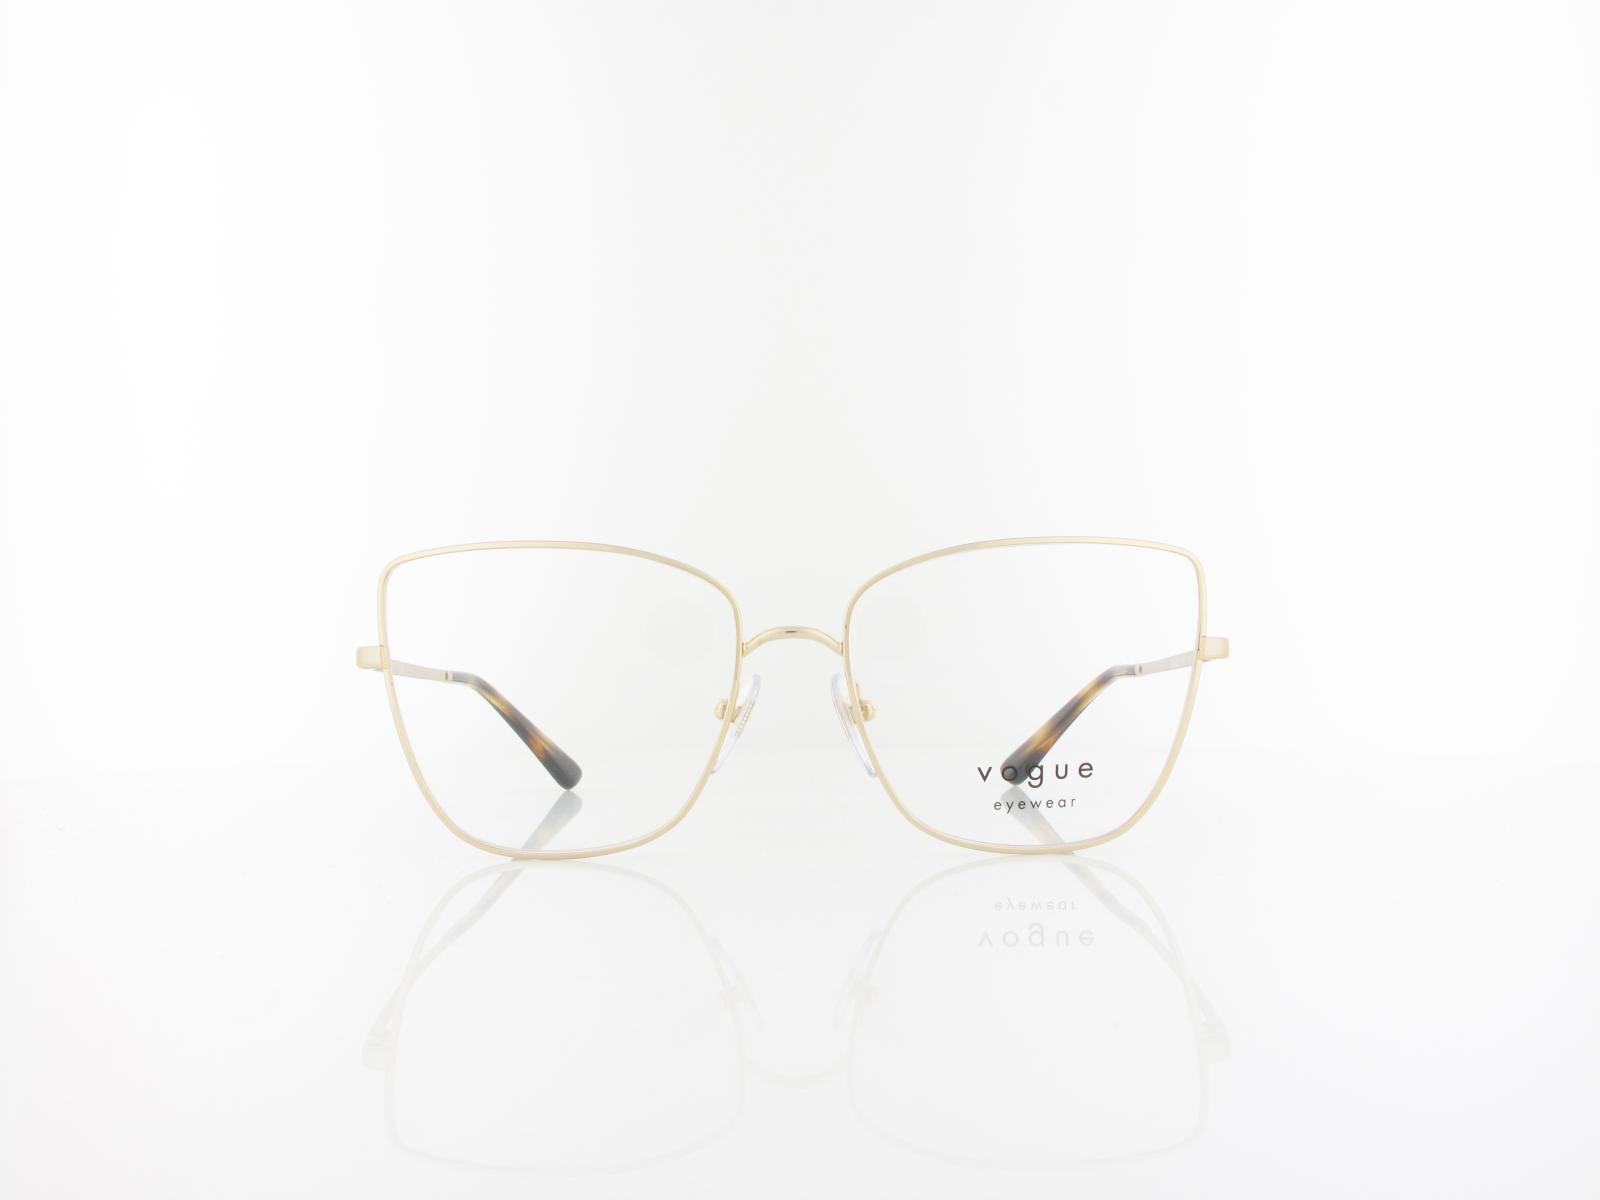 Vogue eyewear | VO4225 848 55 | pale gold